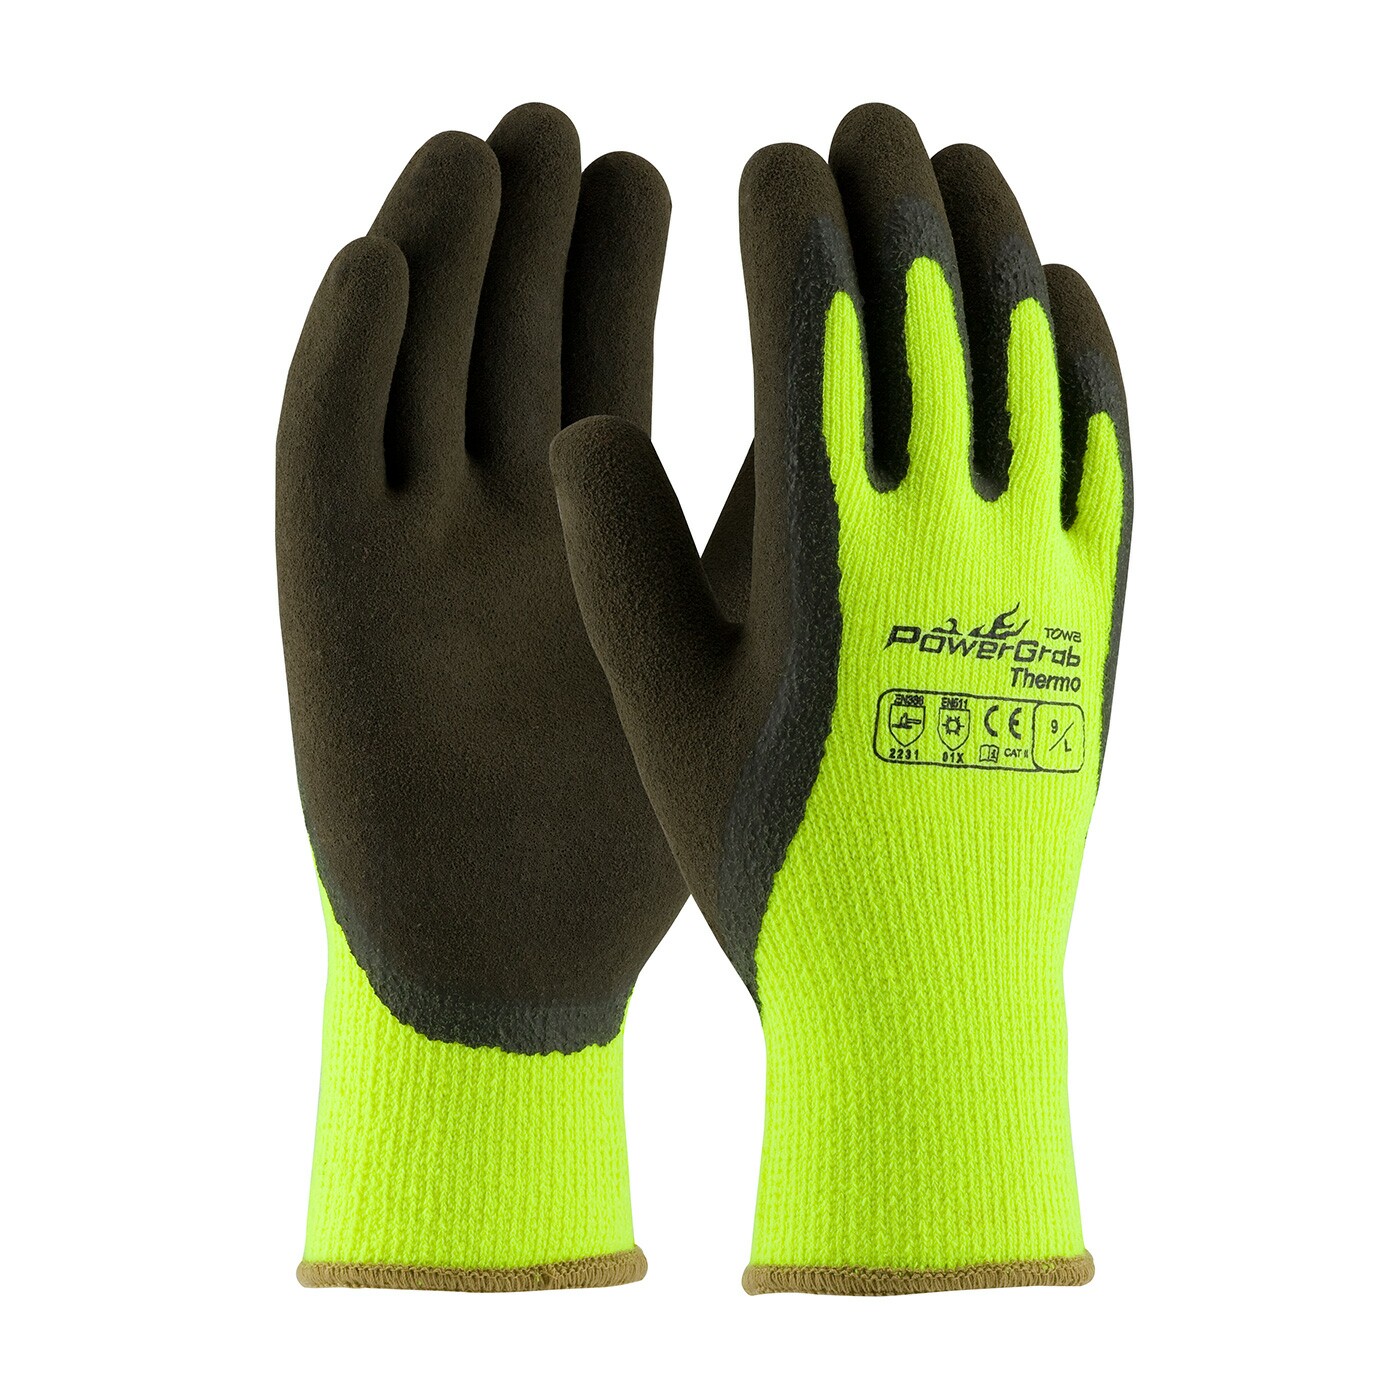 https://www.gloves-online.com/prodimages/GO/41-1405-powergrab-thermo-hi-vis-microfinish-grip-gloves-lime.jpg